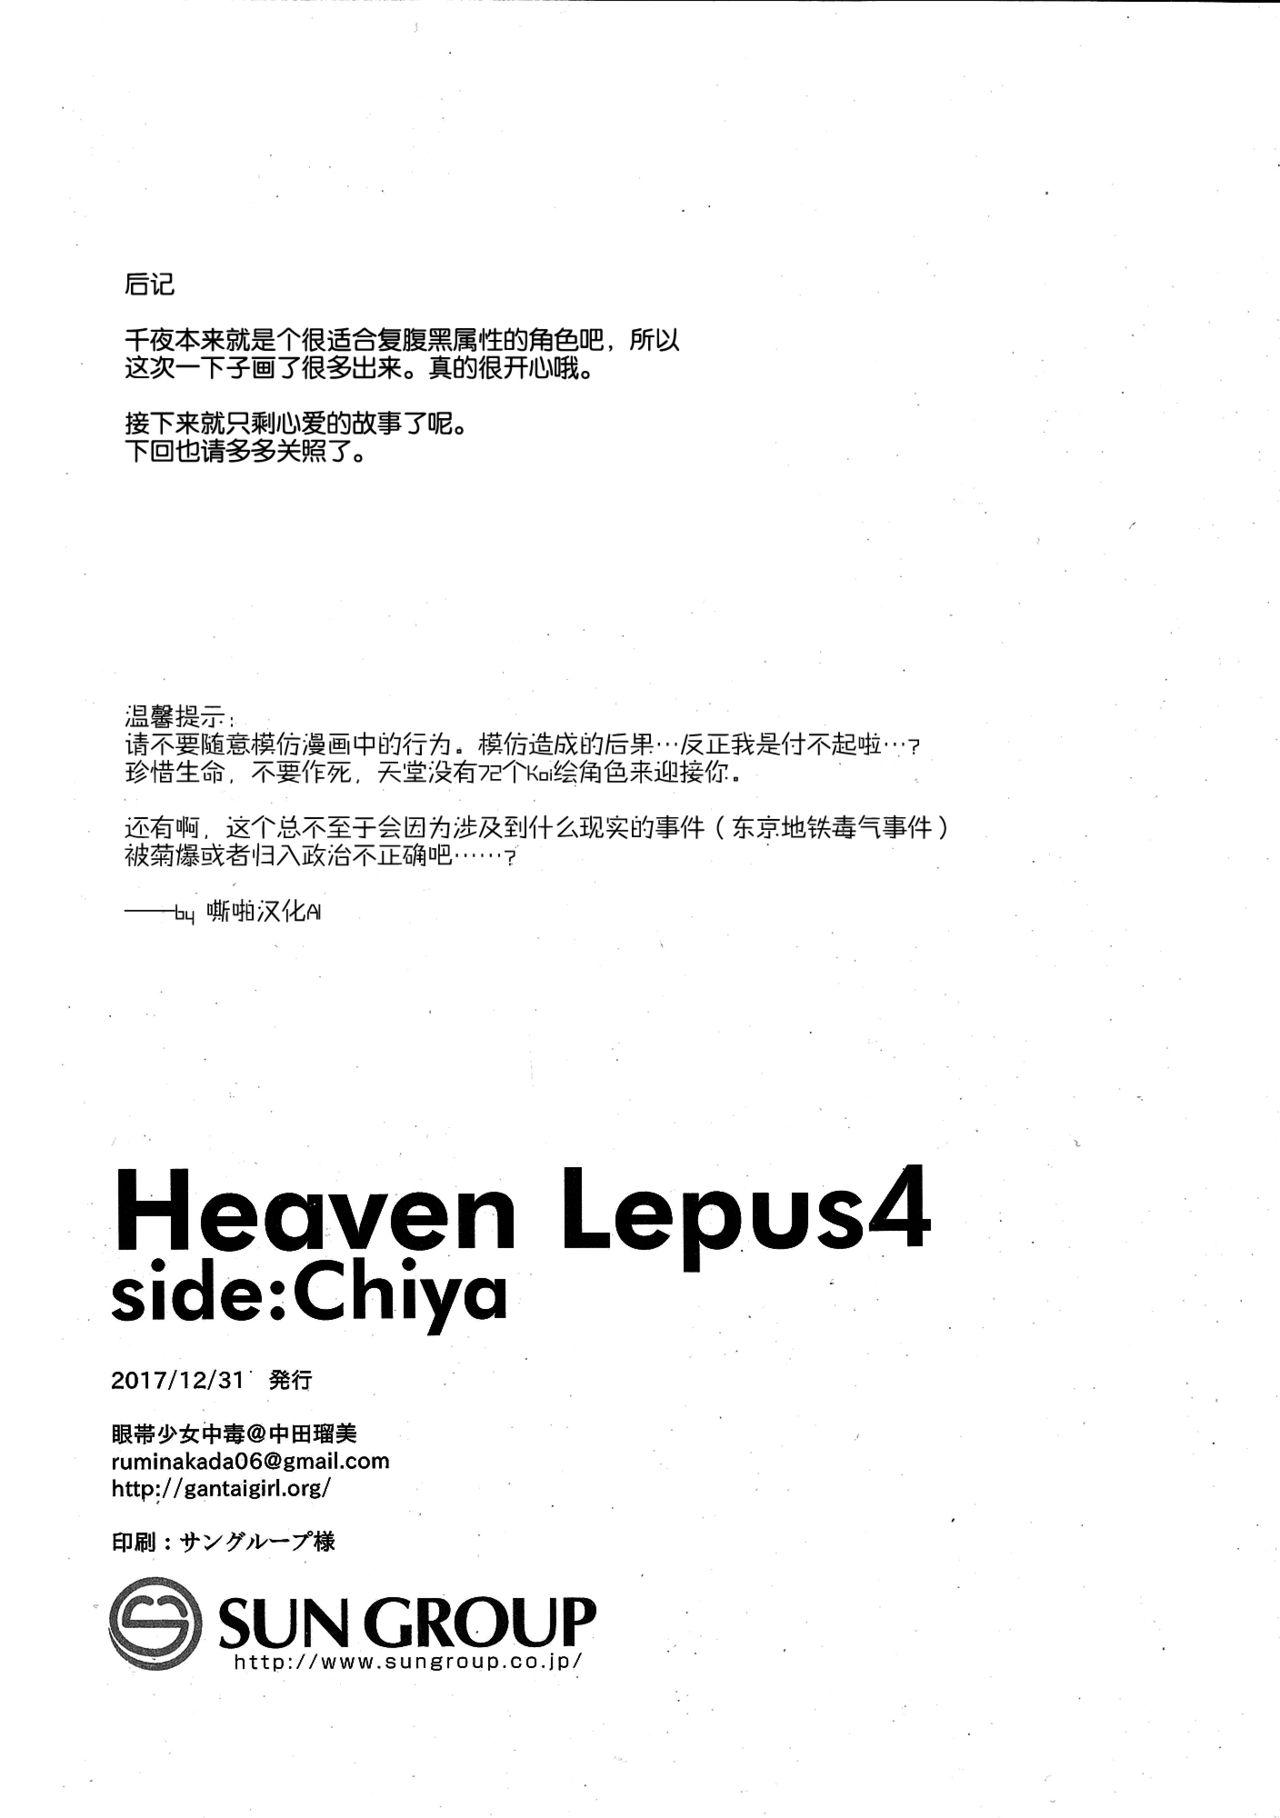 Heaven Lepus4 Side:Chiya 23